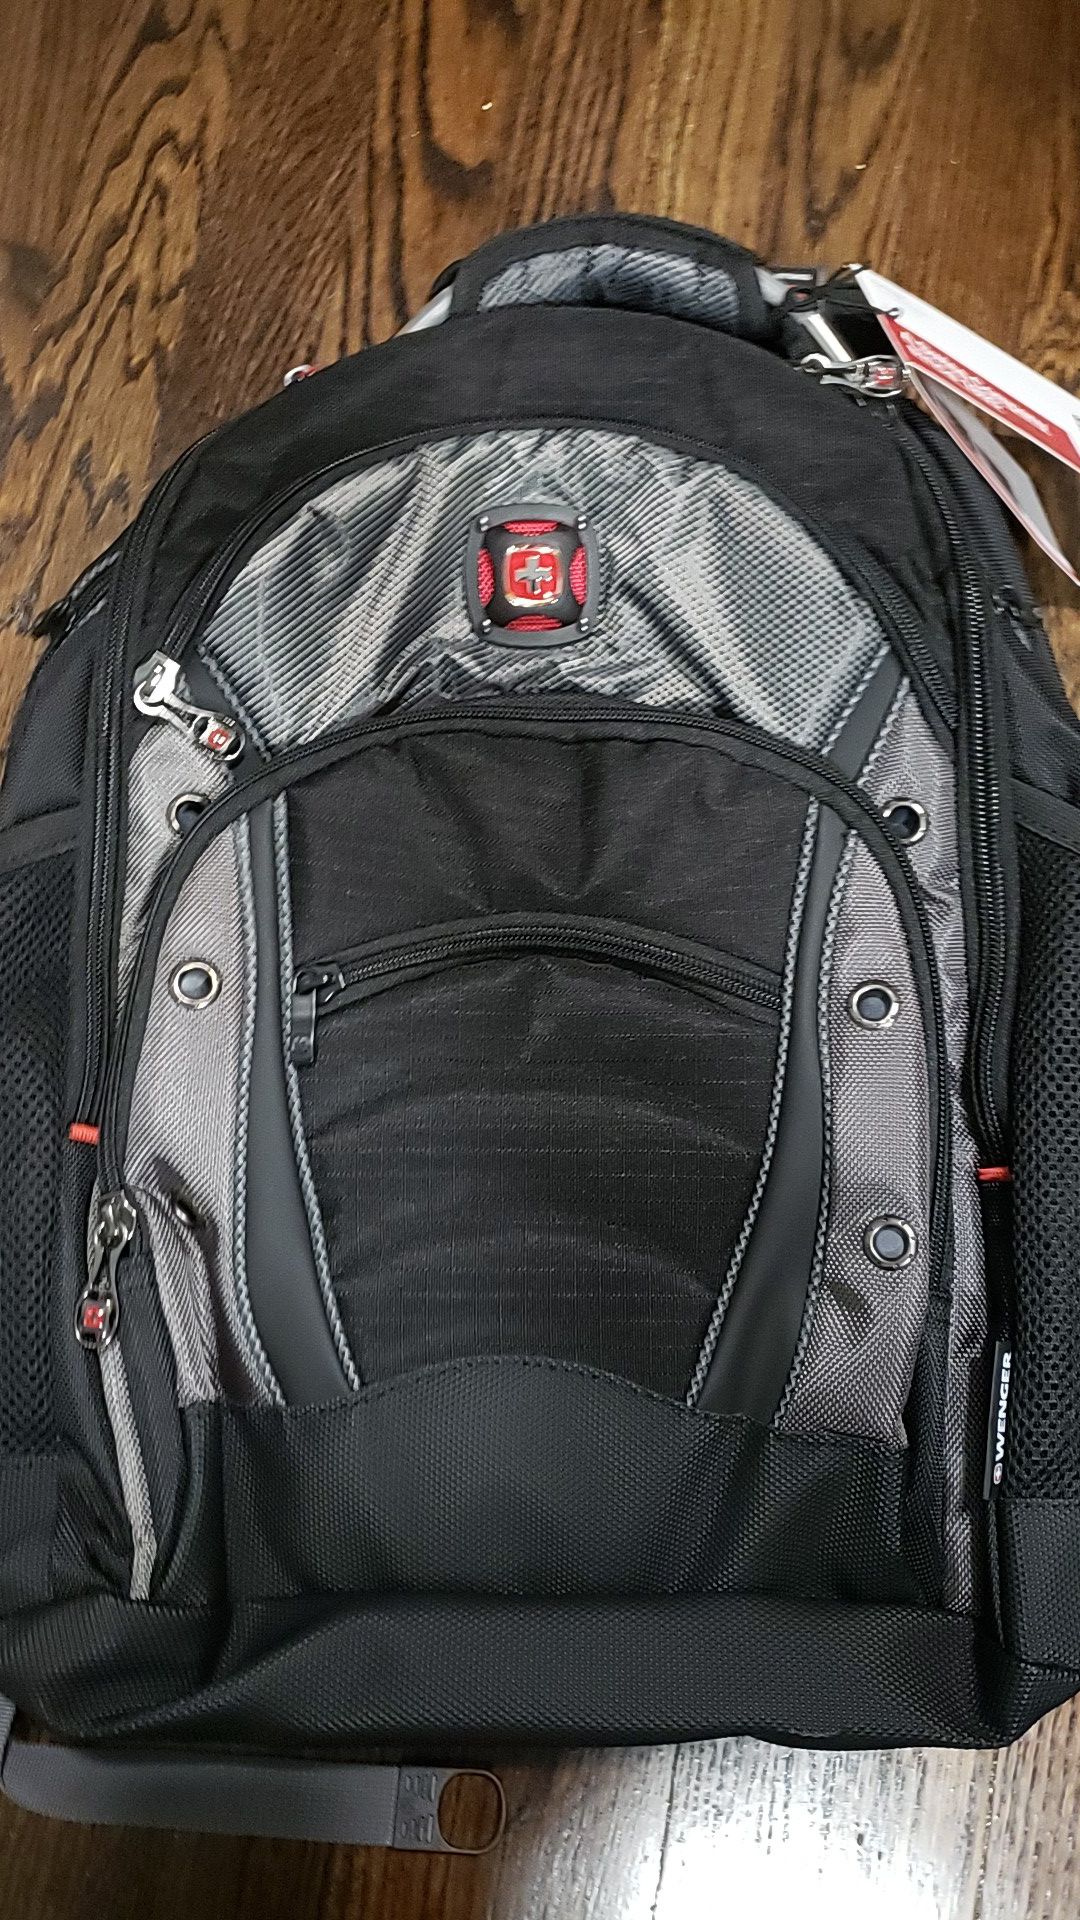 New Wenger 16" Laptop backpack with tablet pocket